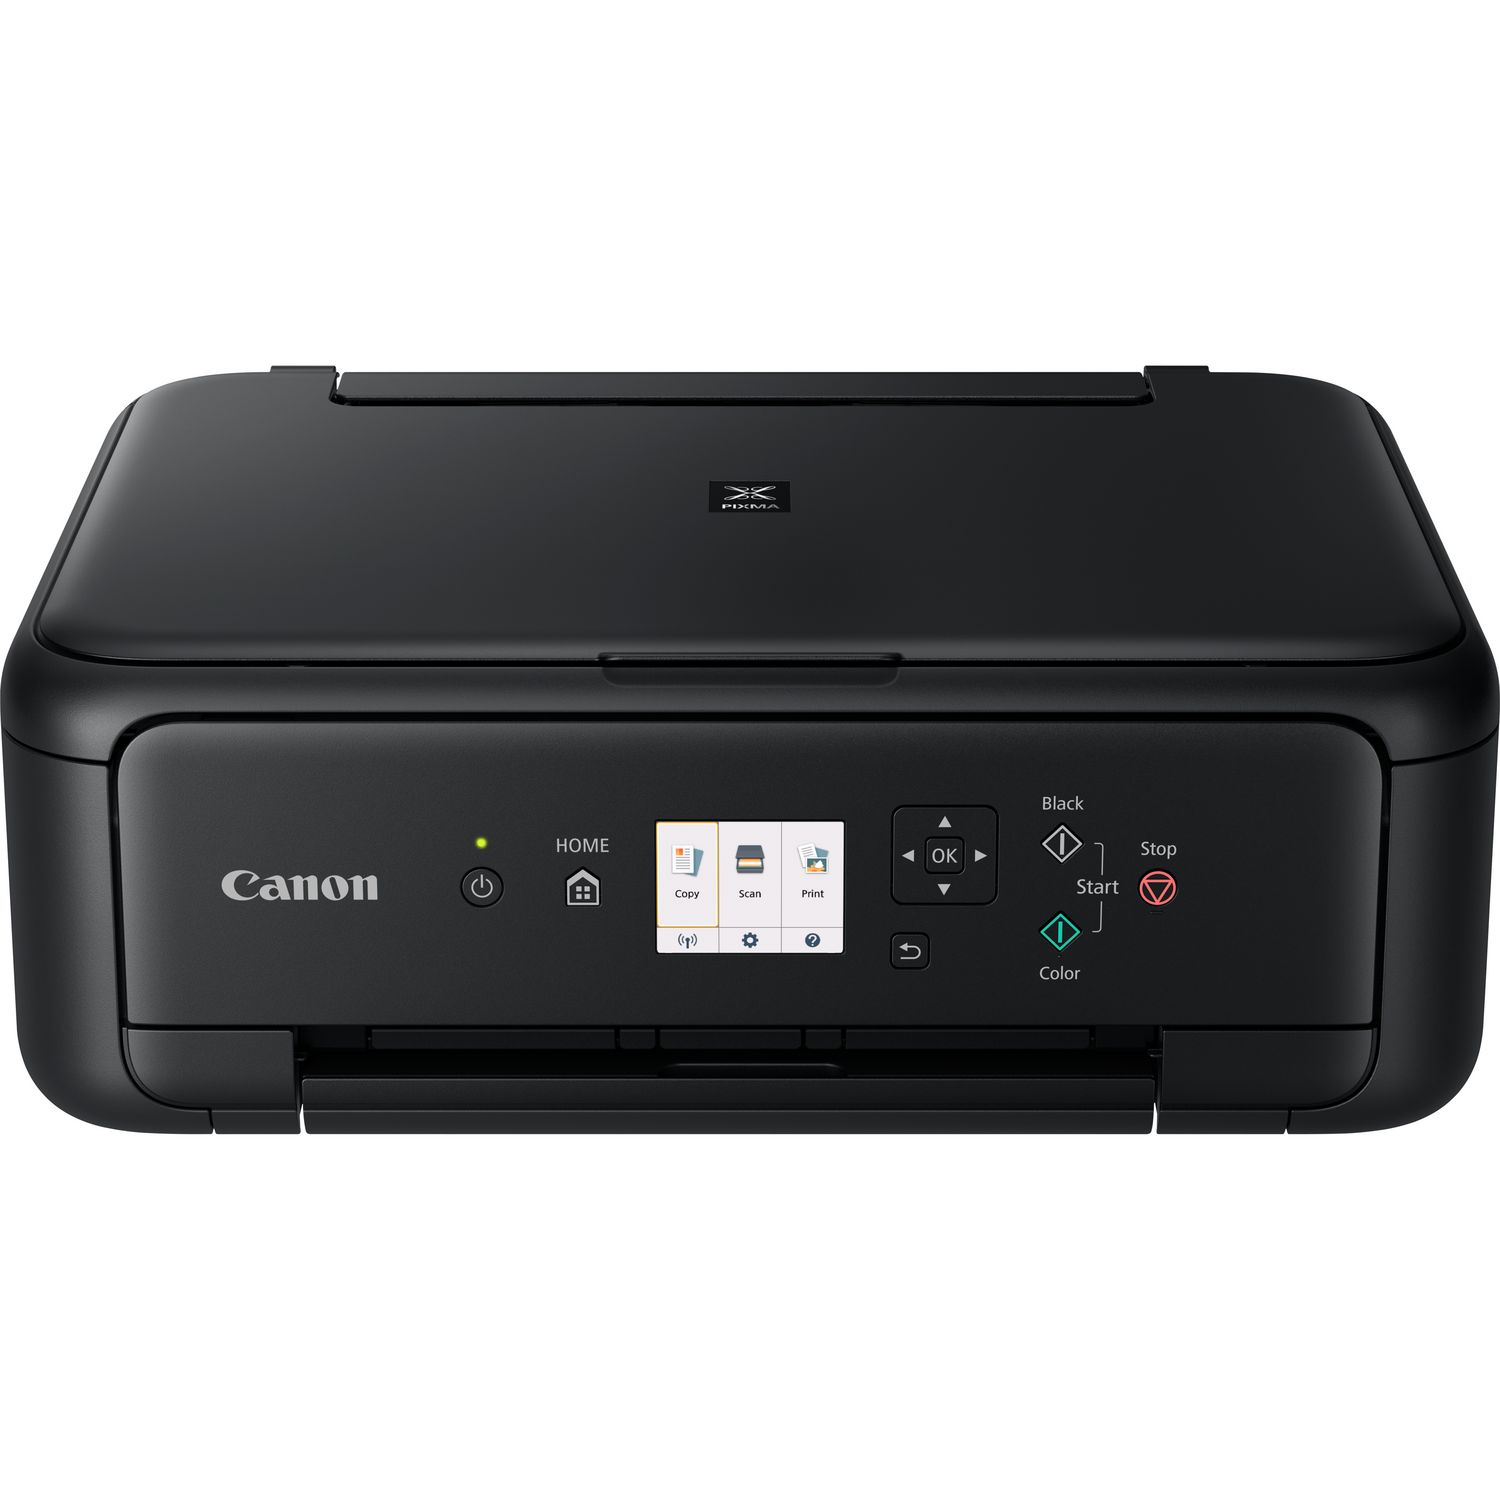 Canon Pixma TS5140 - Black - A4 Multifunction Printer, Print, Copy and Scan